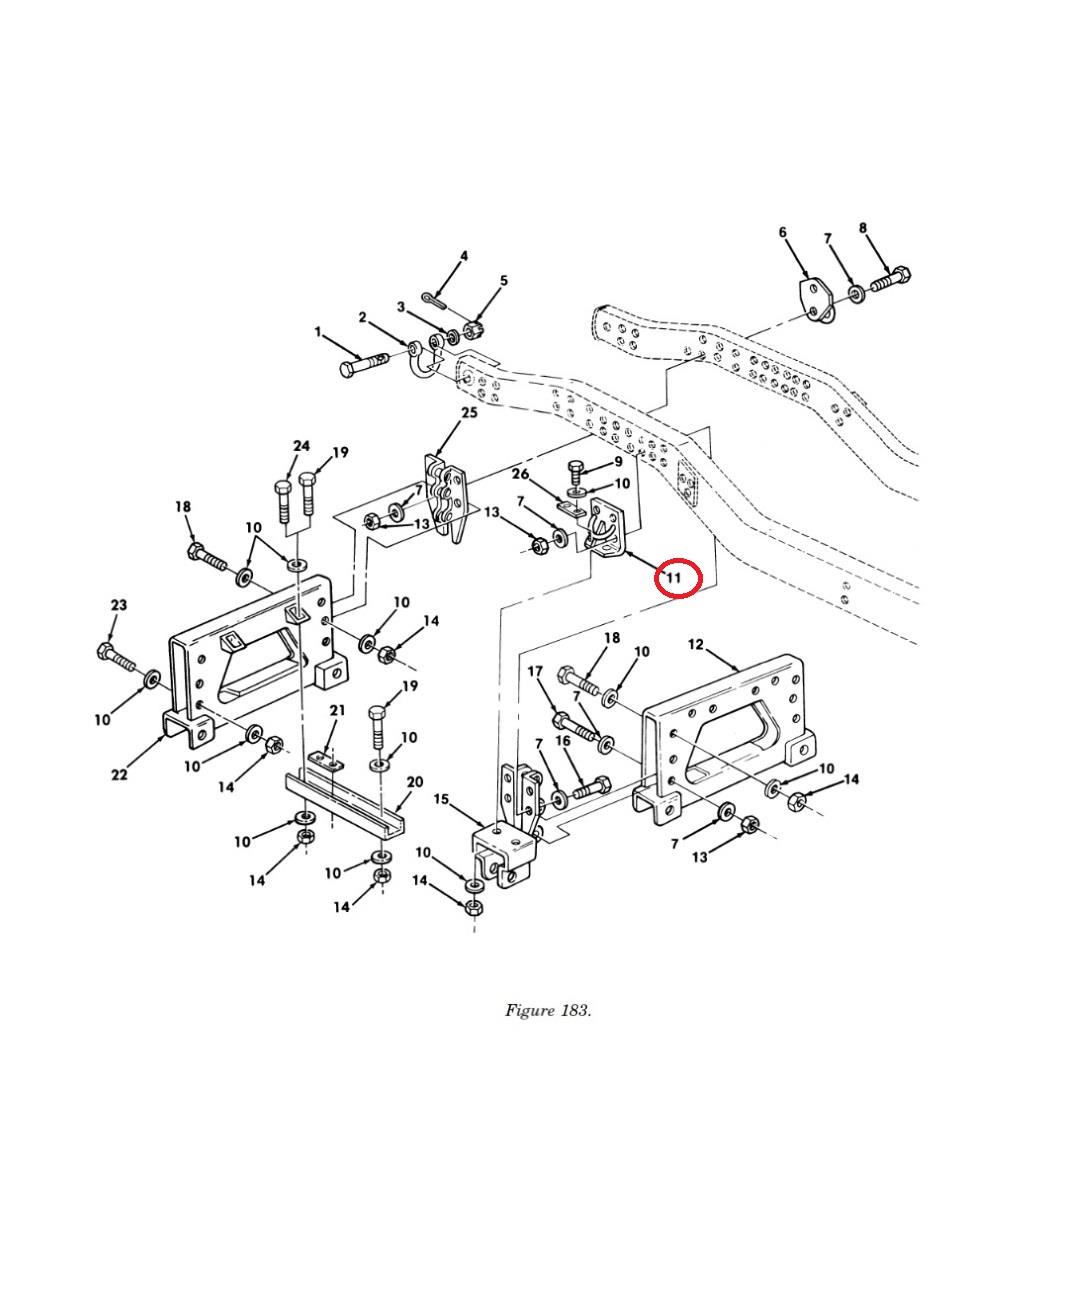 HM-988 | HM-988 HMMWV Rear Suspension Mounting Bracket Parts Diagram (Large).jpg